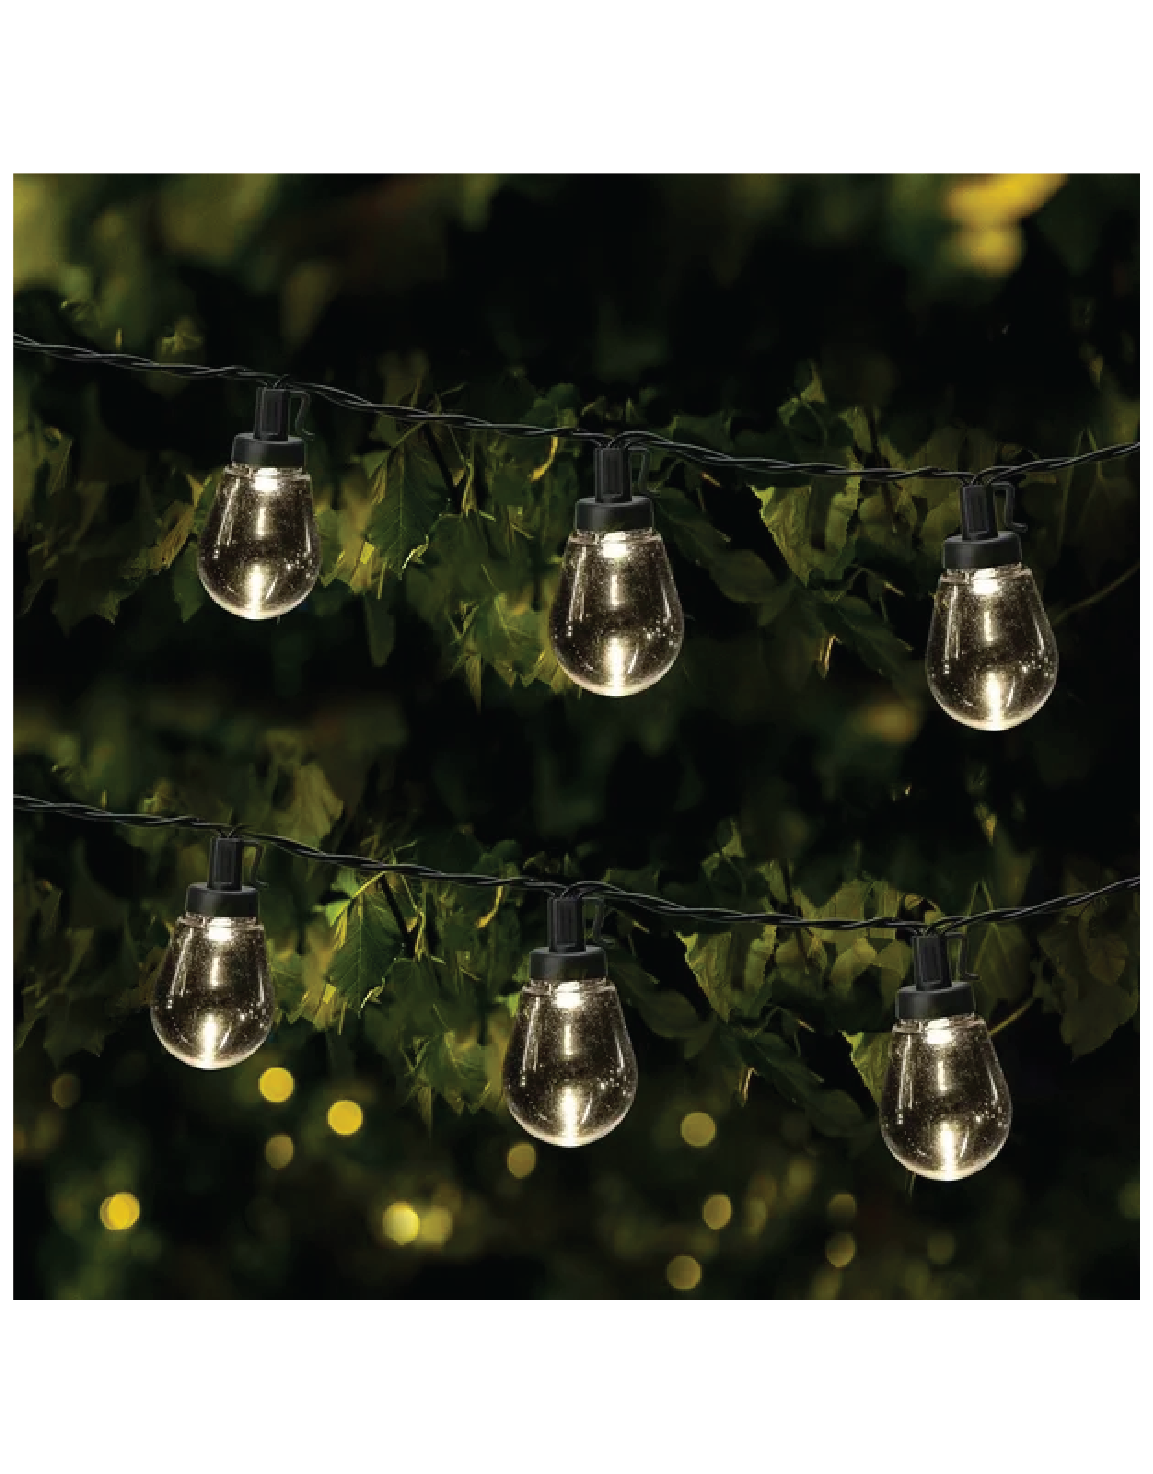 string lights on a tree